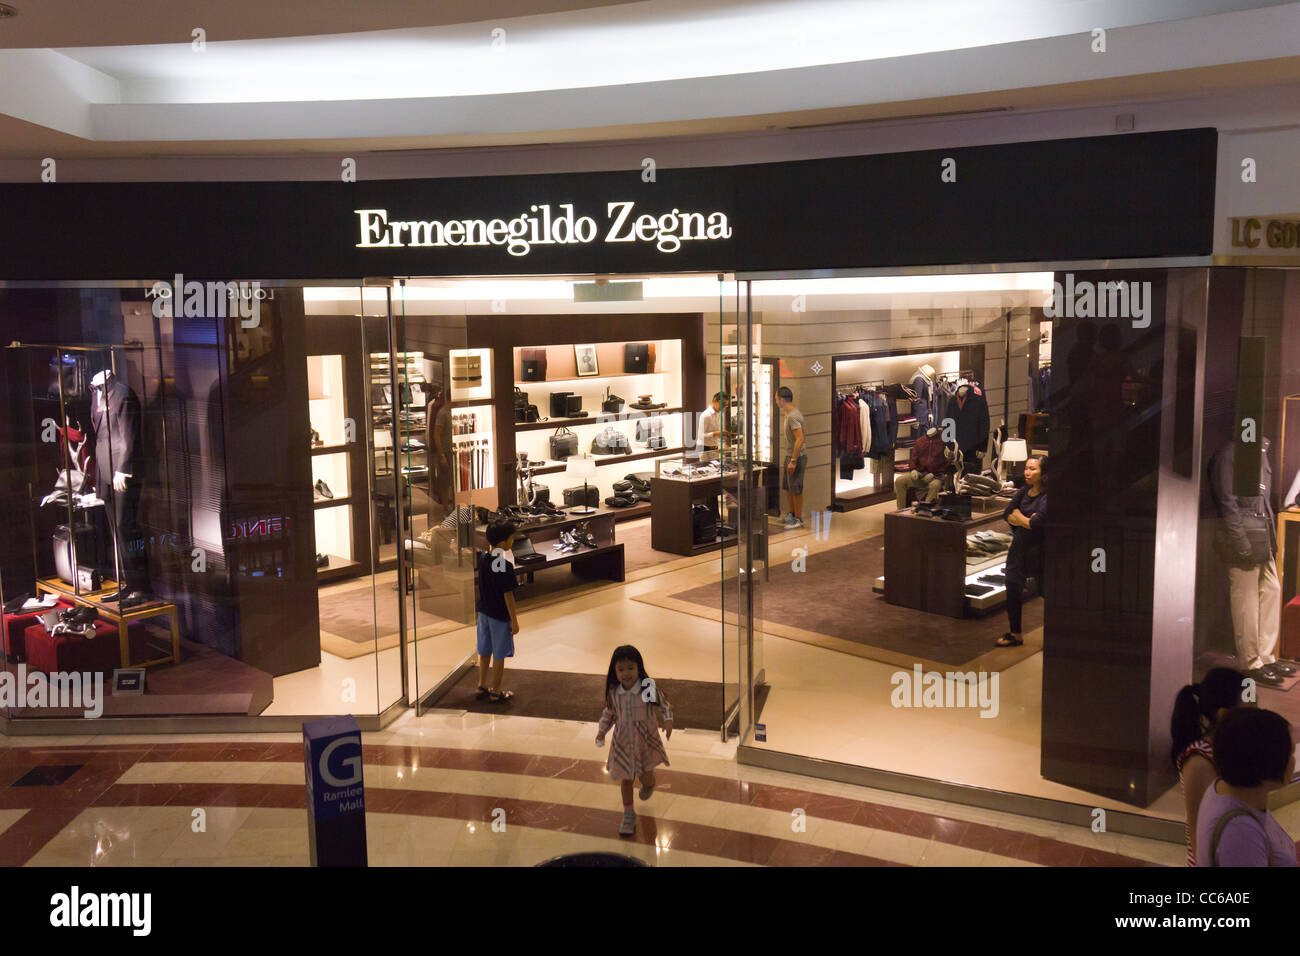 Ermengildo Zegna store, Suria KLCC, Kuala Lumpur, Malaysia Stock Photo